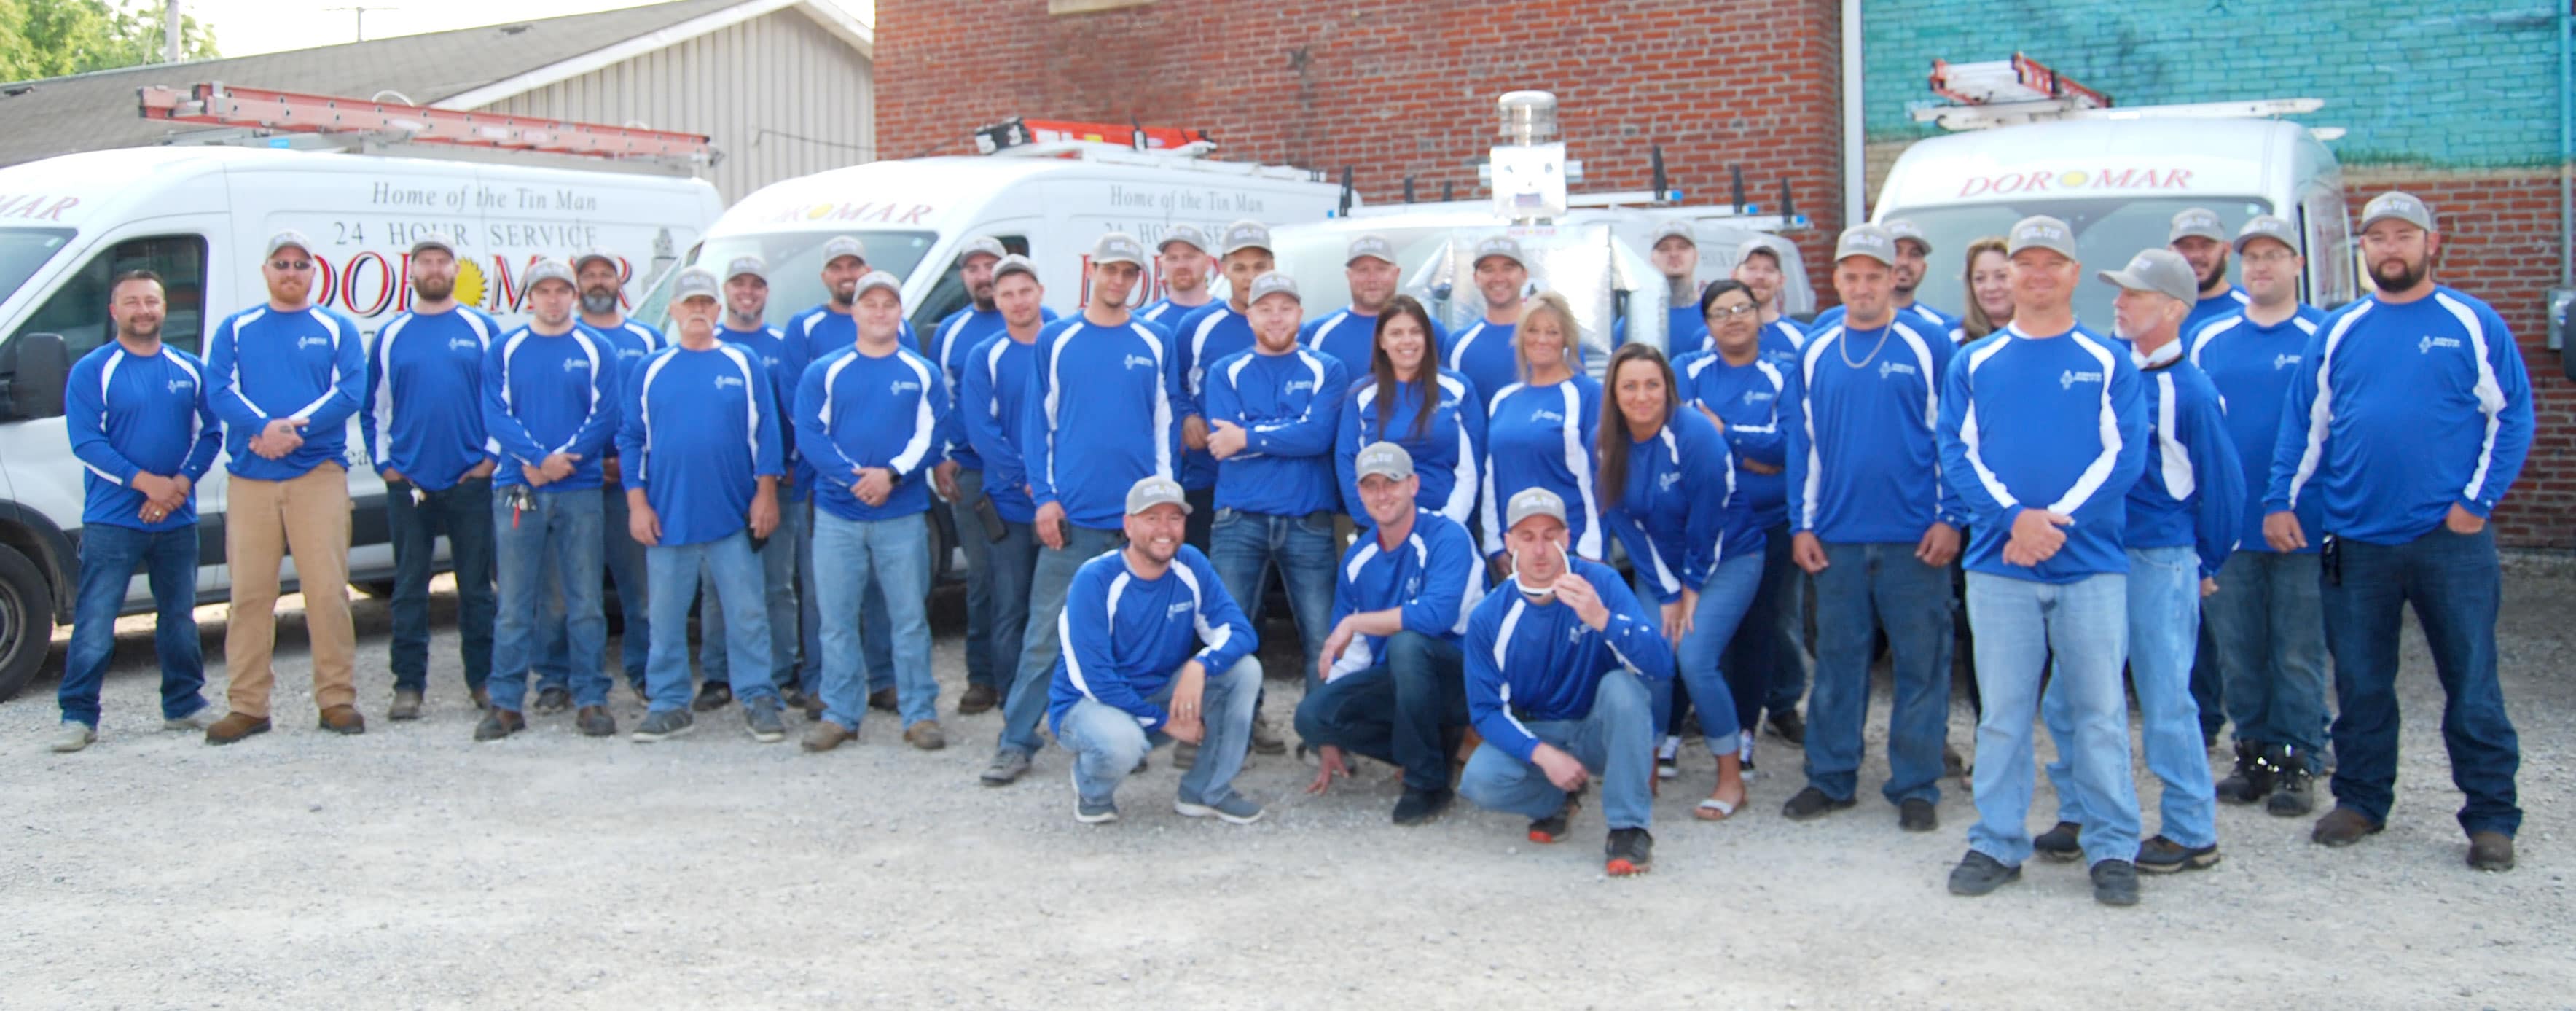 Meet the Dor-Mar Team | Reynoldsburg Ohio Professional HVAC service technicians, installers and customer service representatives